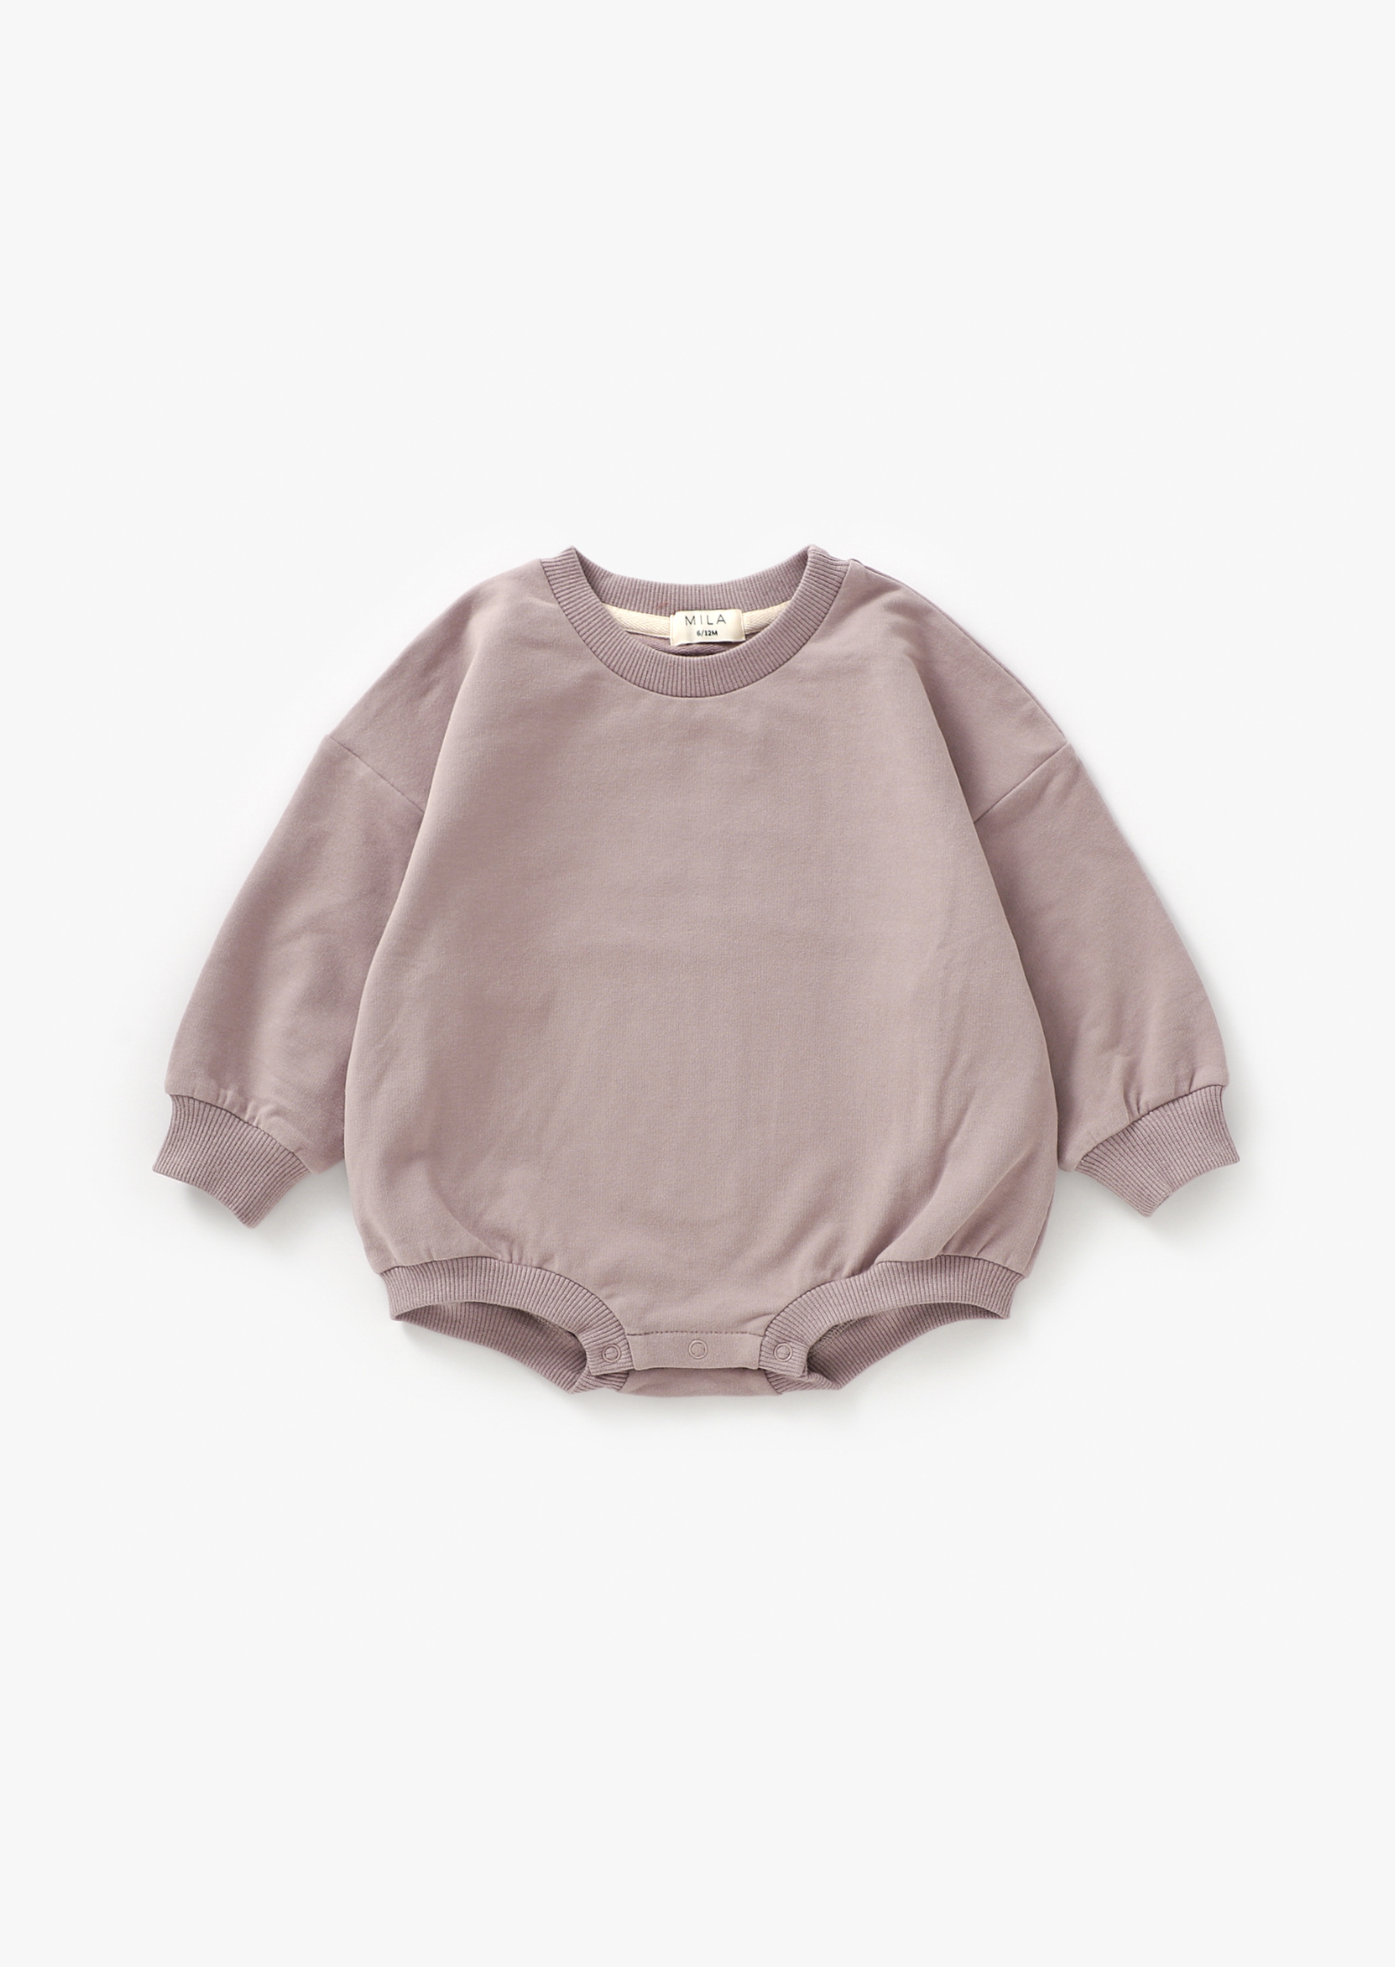 Sweatshirt Bubble Romper | Pale Mulberry - Mila & Co.